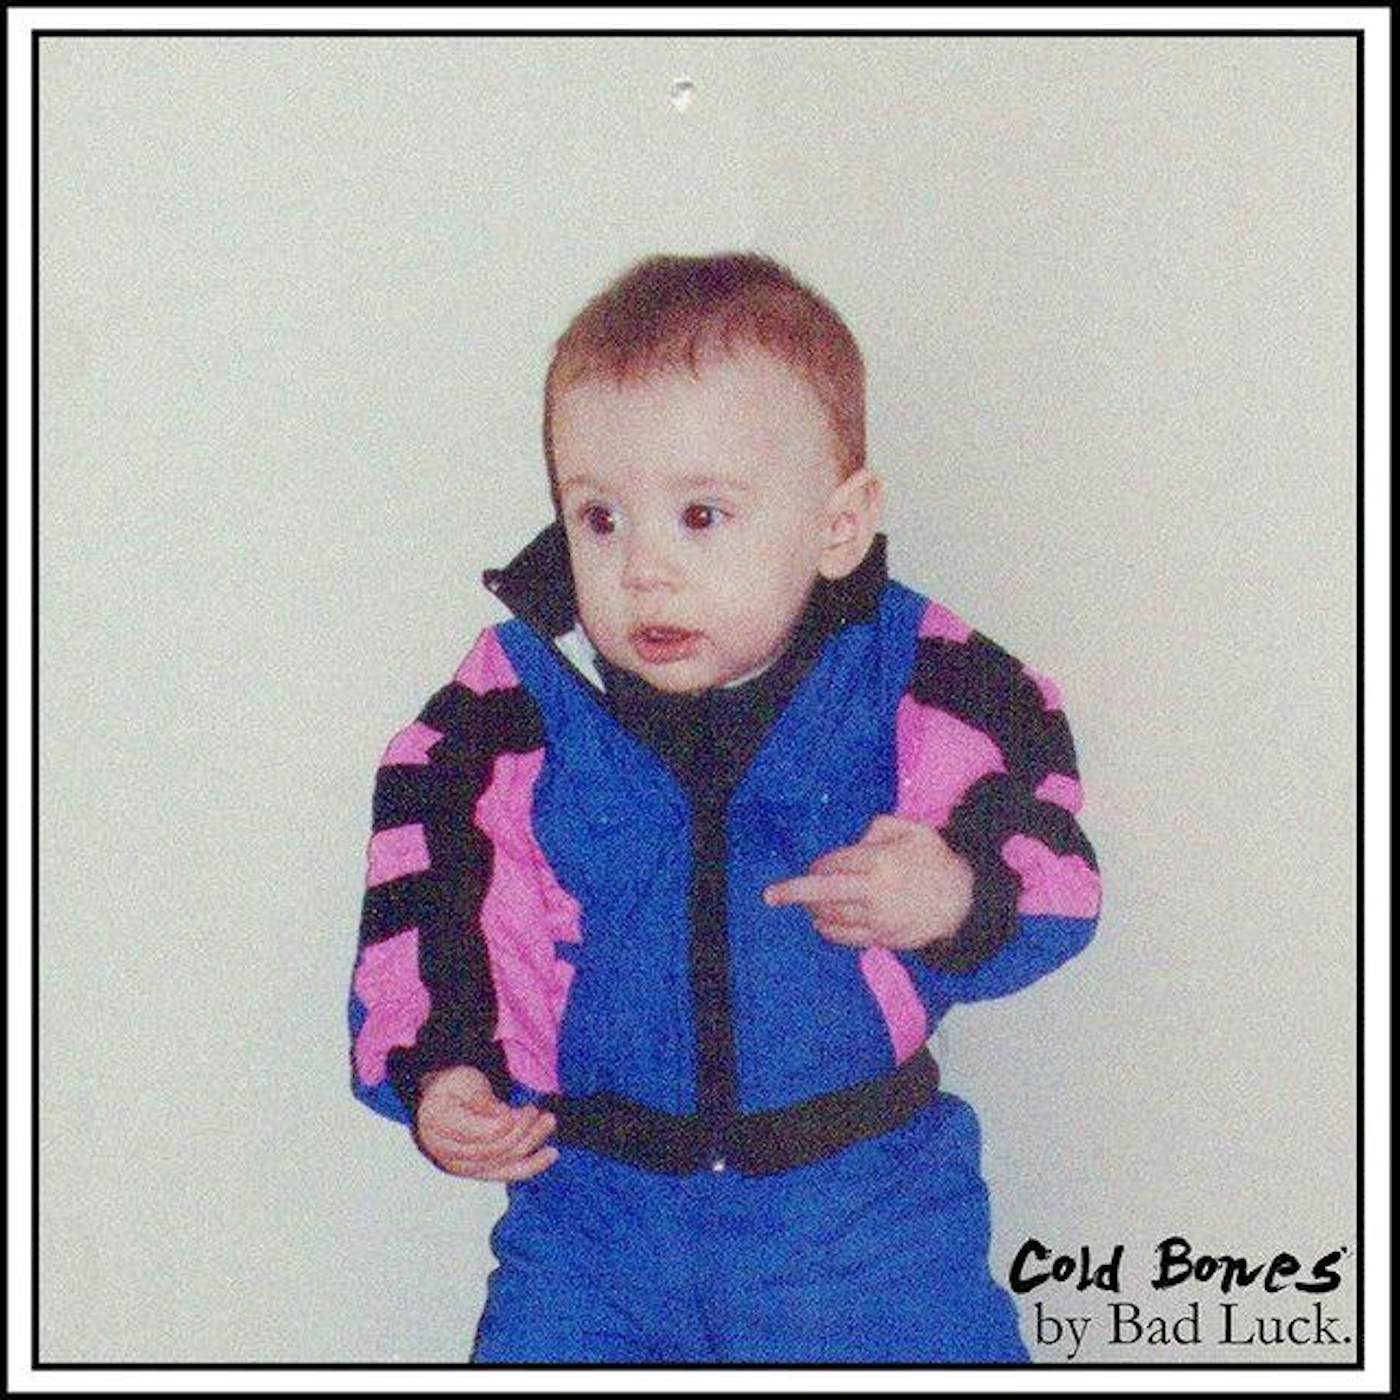 Bad Luck. Cold Bones Vinyl Record